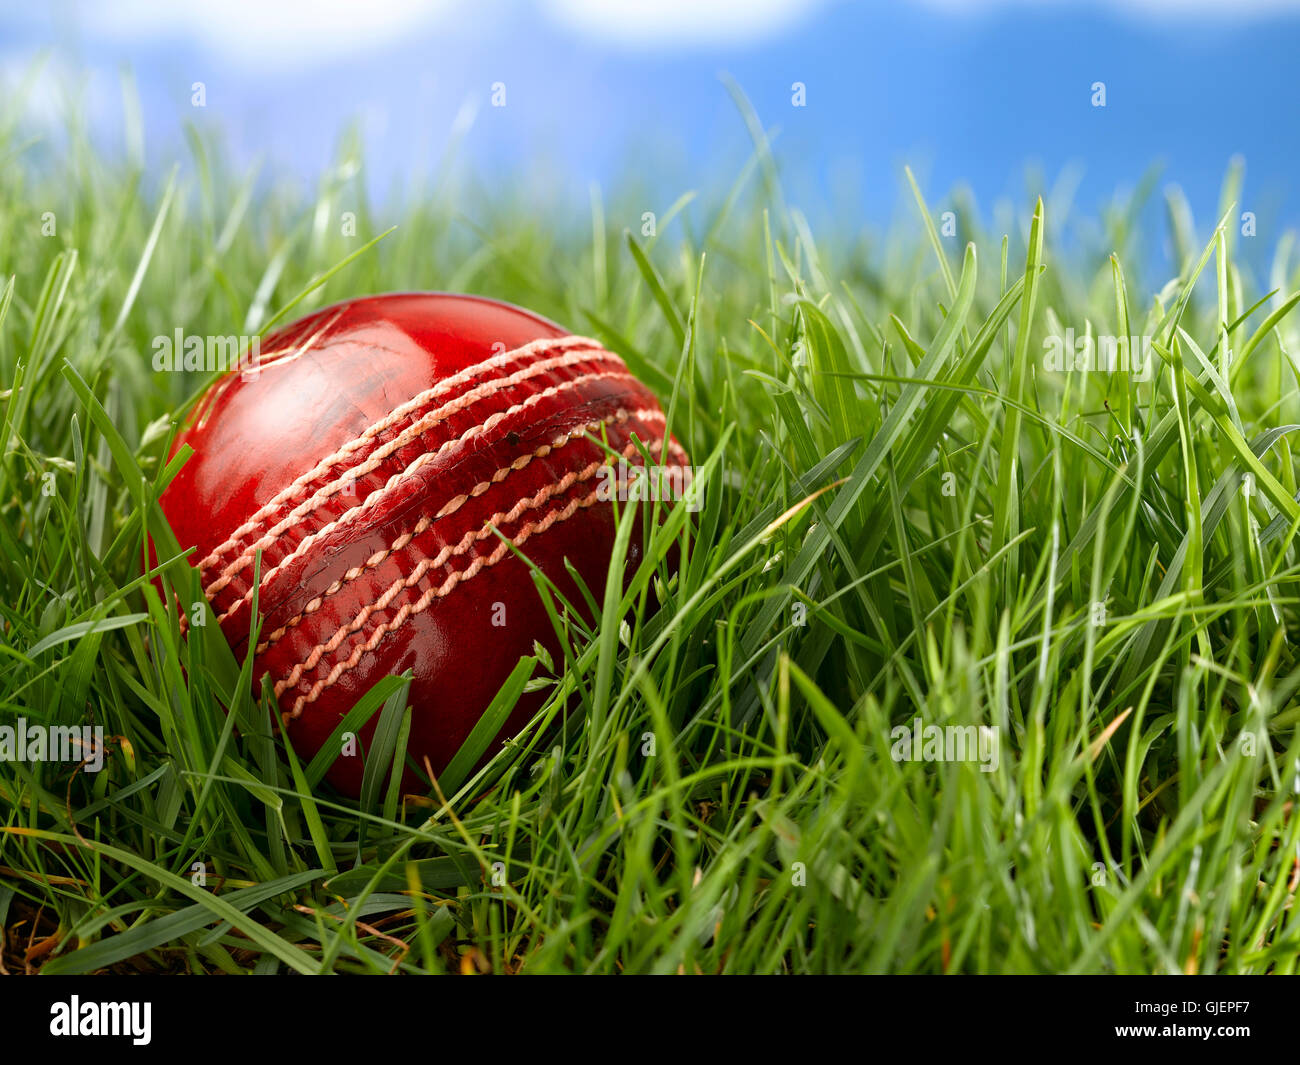 Rotem Leder Cricketball Stockfoto